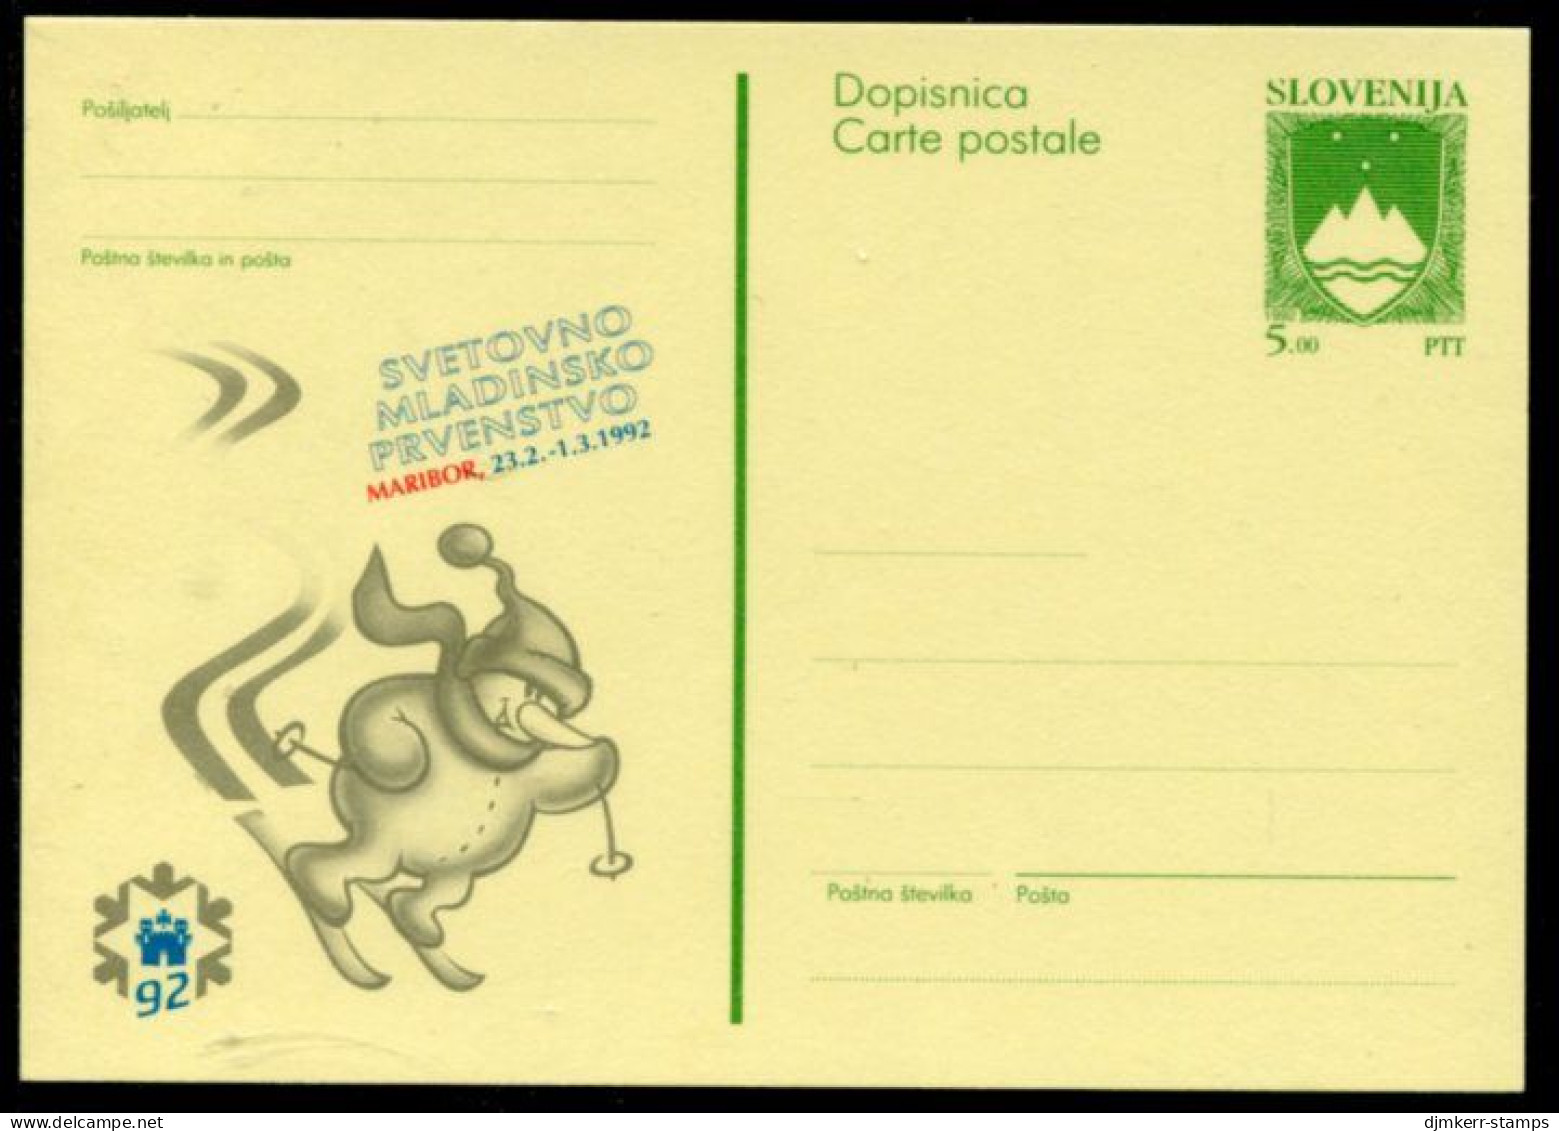 SLOVENIA 1992 5.00 T.  Junior Ski  World Championships Stationery Card, Unused.   Michel P2 - Slowenien